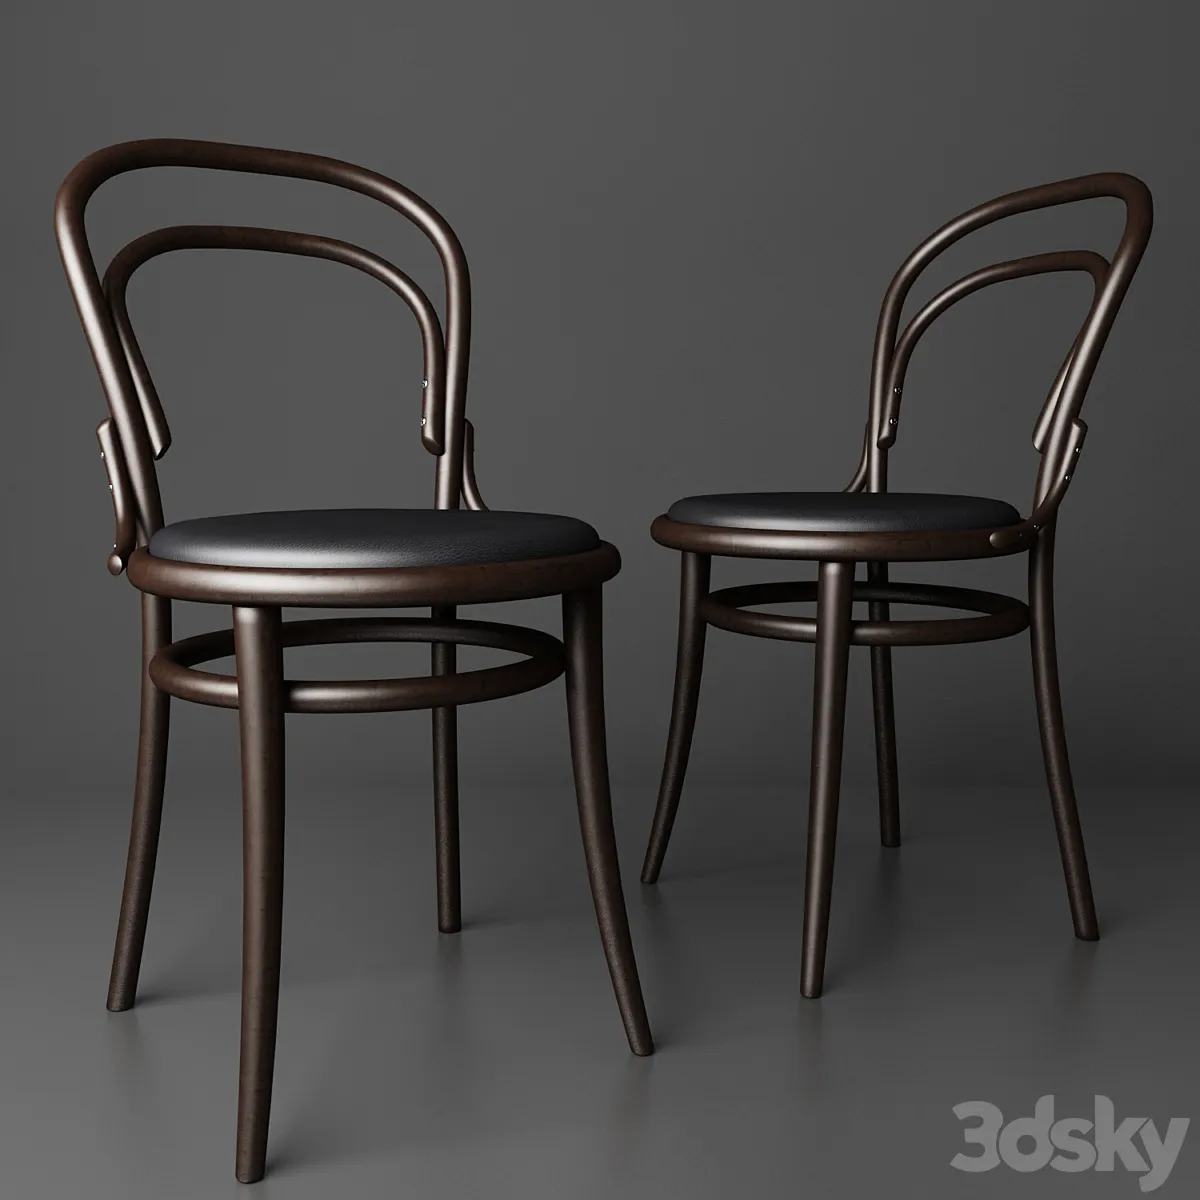 مدل سه بعدی صندلی کافه تری دی مکس + ویری 3dsky – Cafe chair (Chair 14) By TON